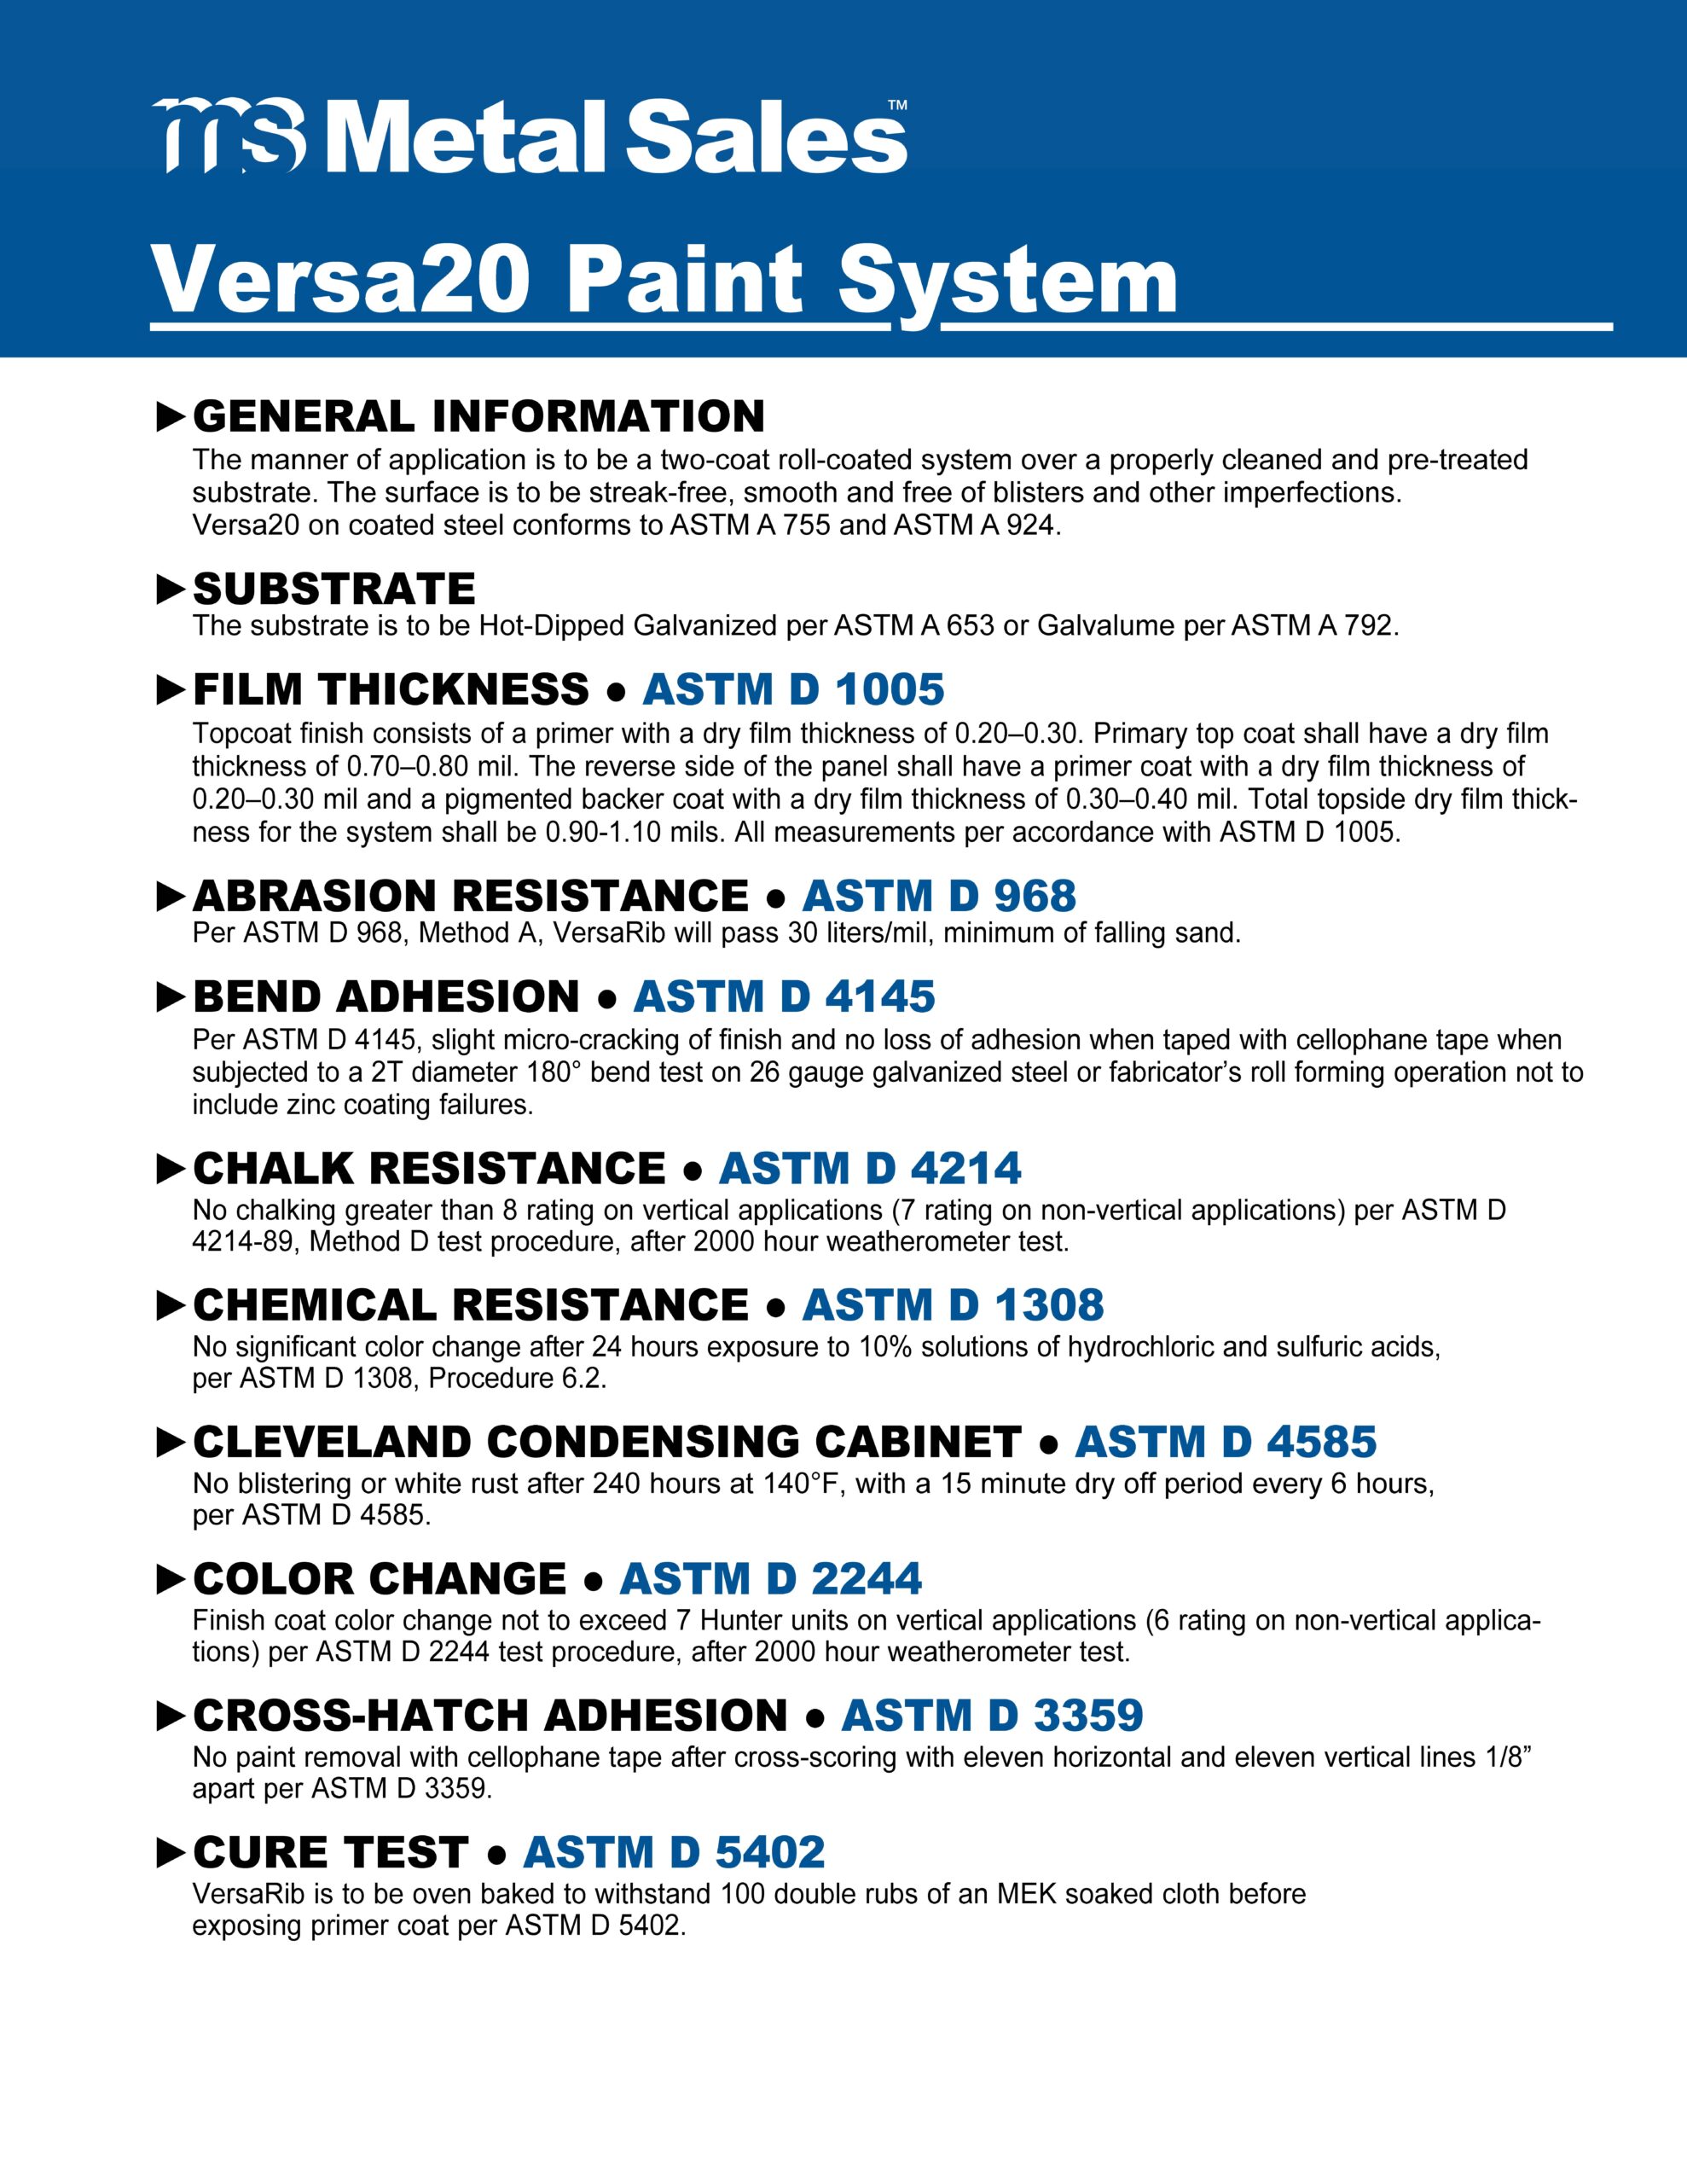 Versa20 Paint System Specs